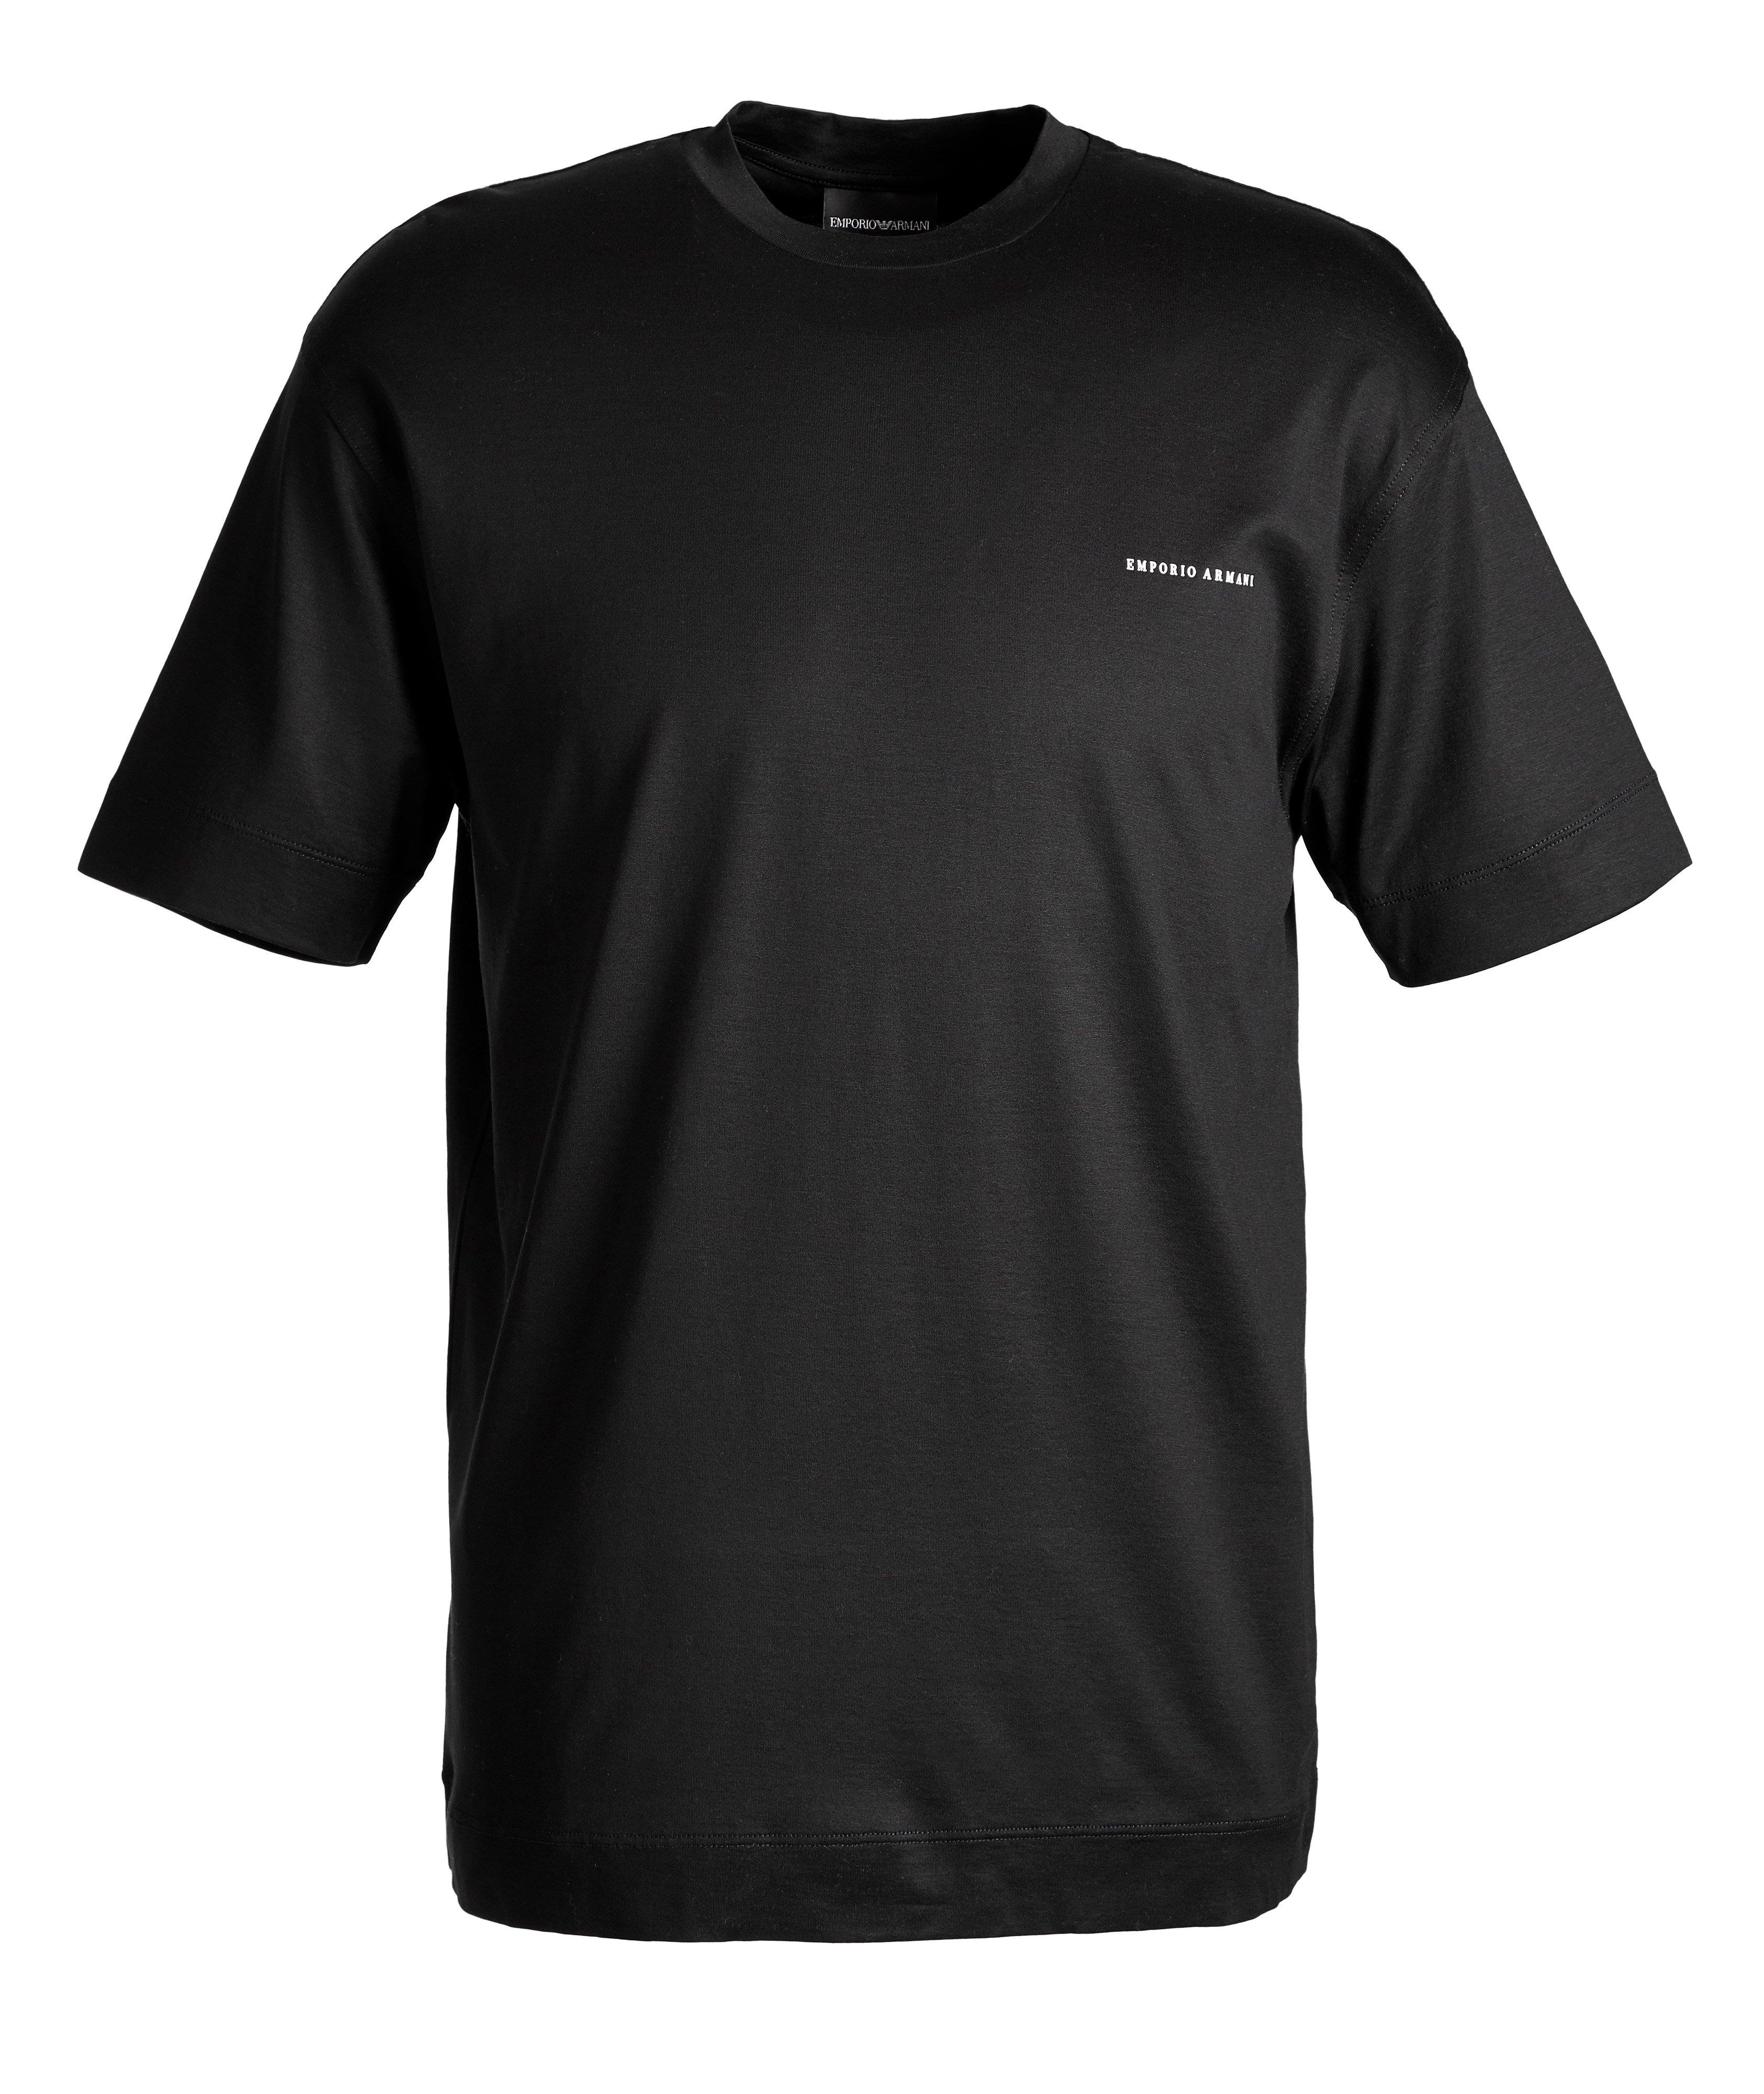 Lyocell-Cotton T-Shirt image 0